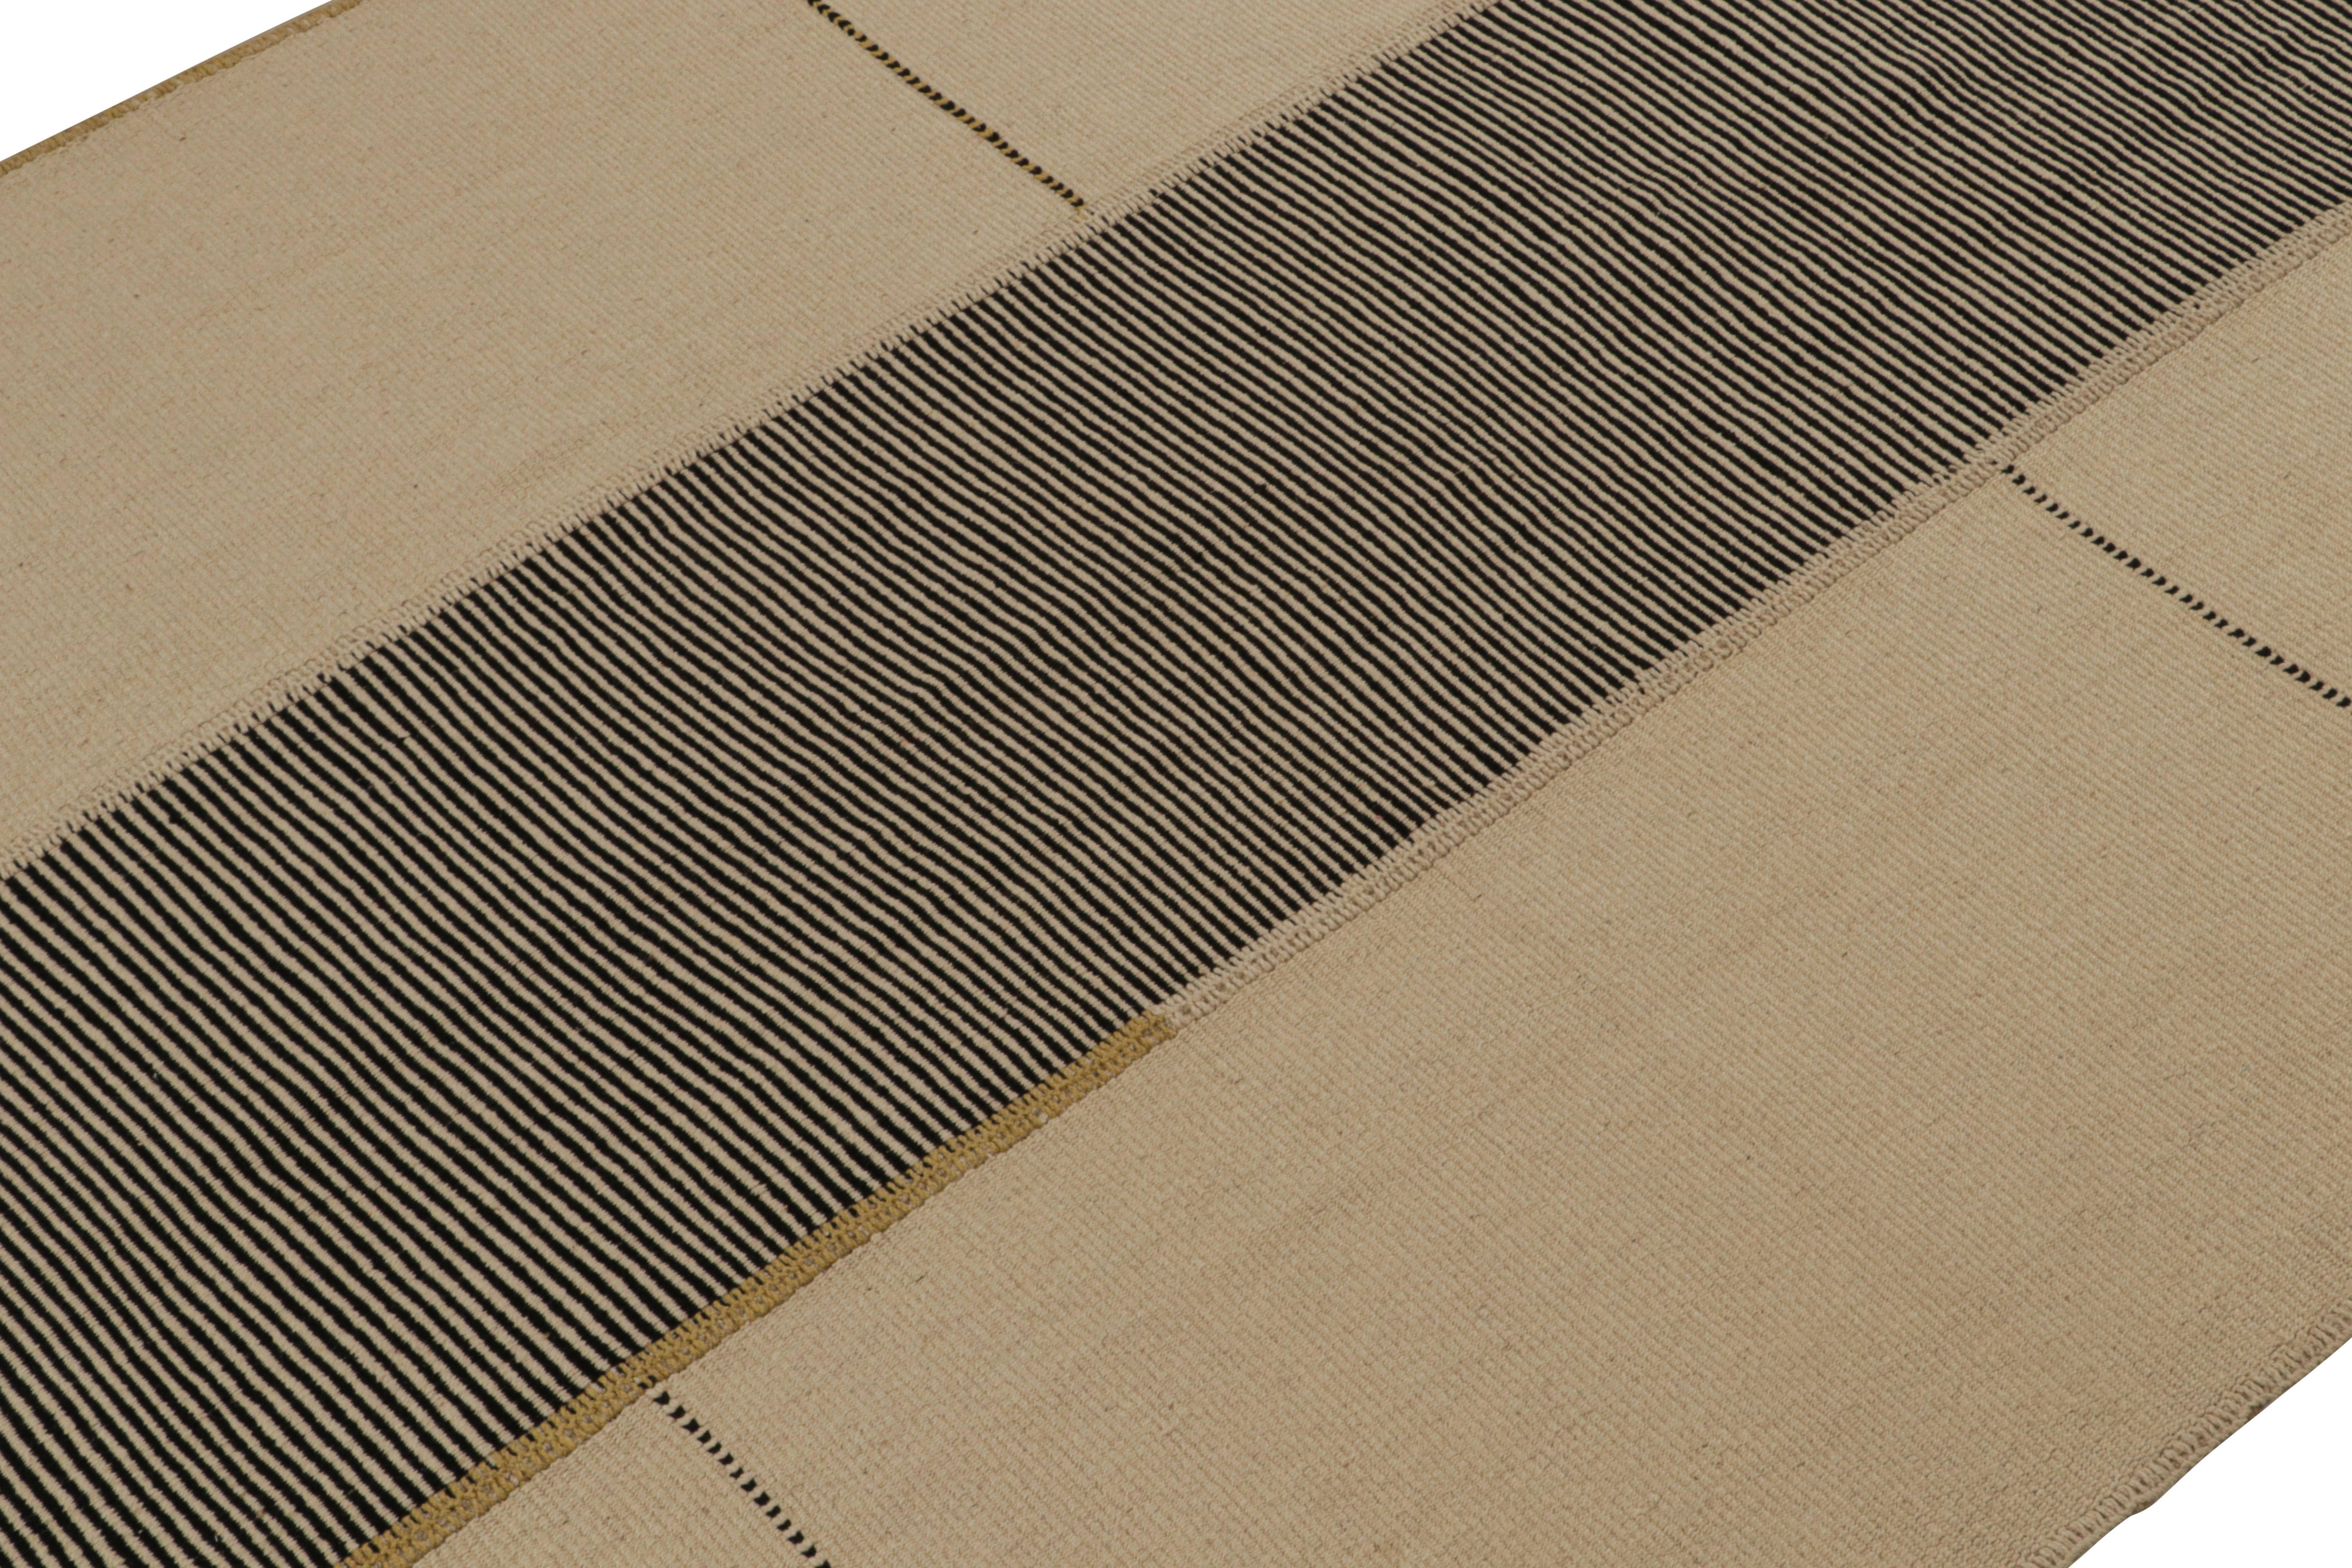 Hand-Woven Rug & Kilim’s Modern Kilim Rug in Beige, Black & Gold Textural Stripes  For Sale